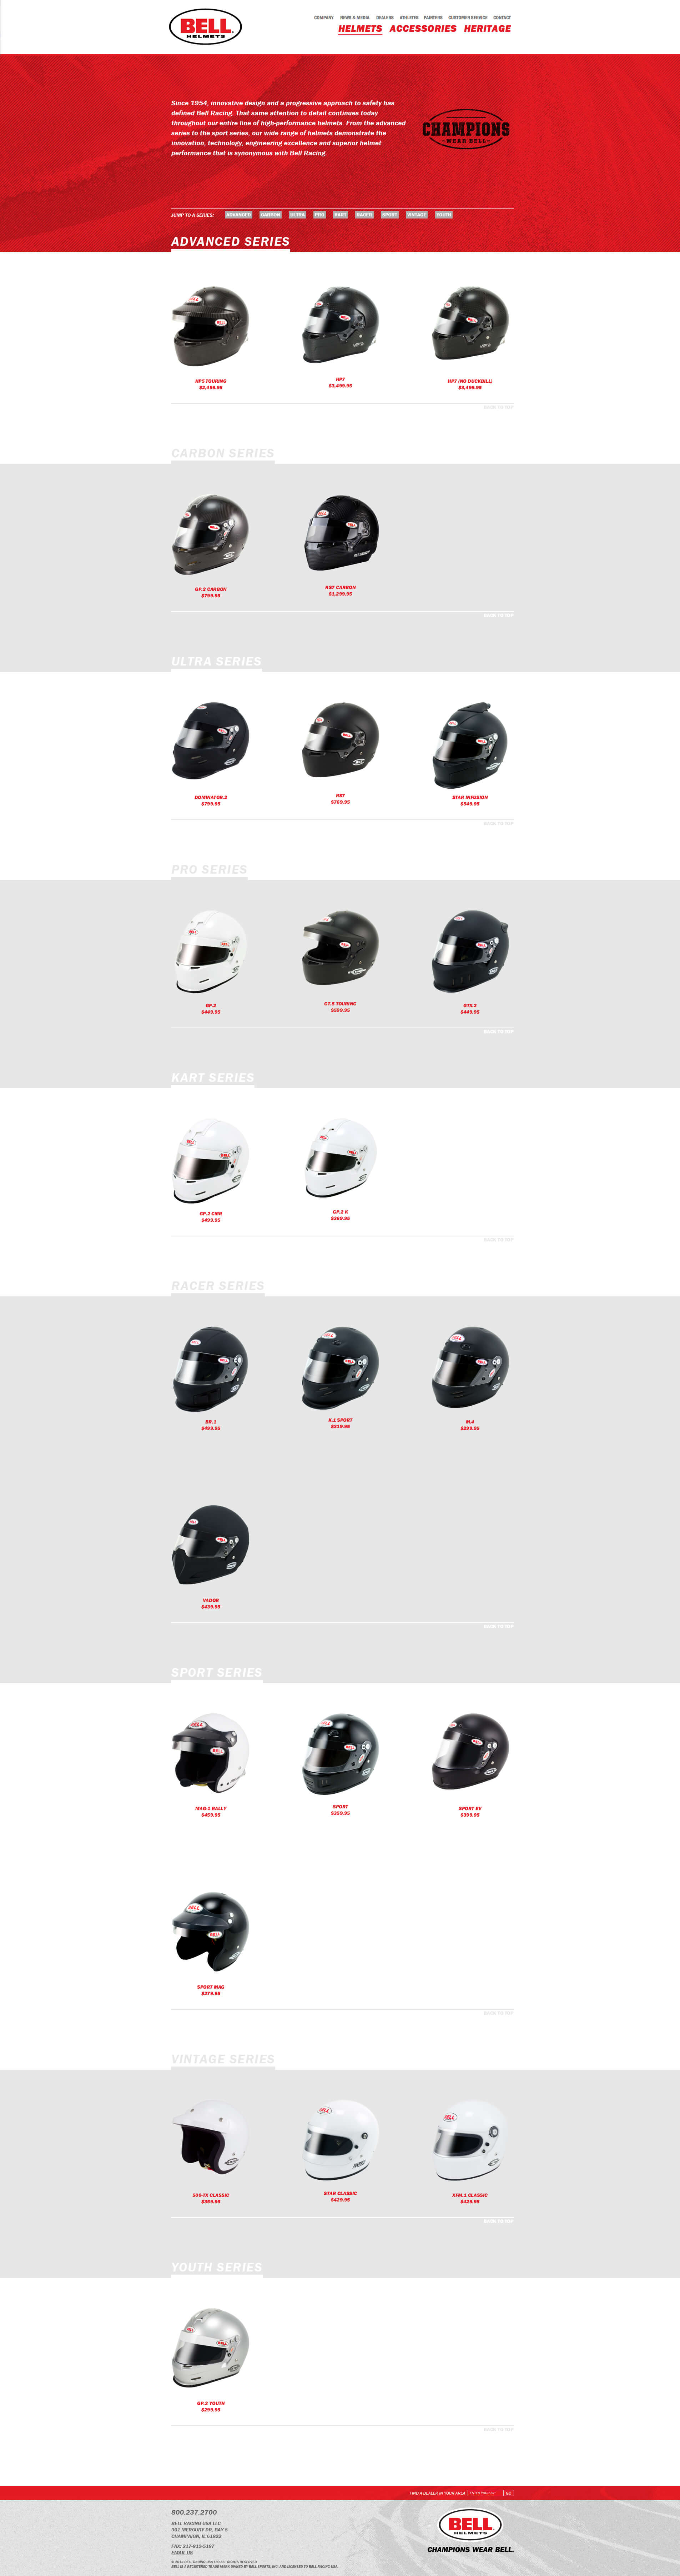 Bell Racing USA - Website & Online Store